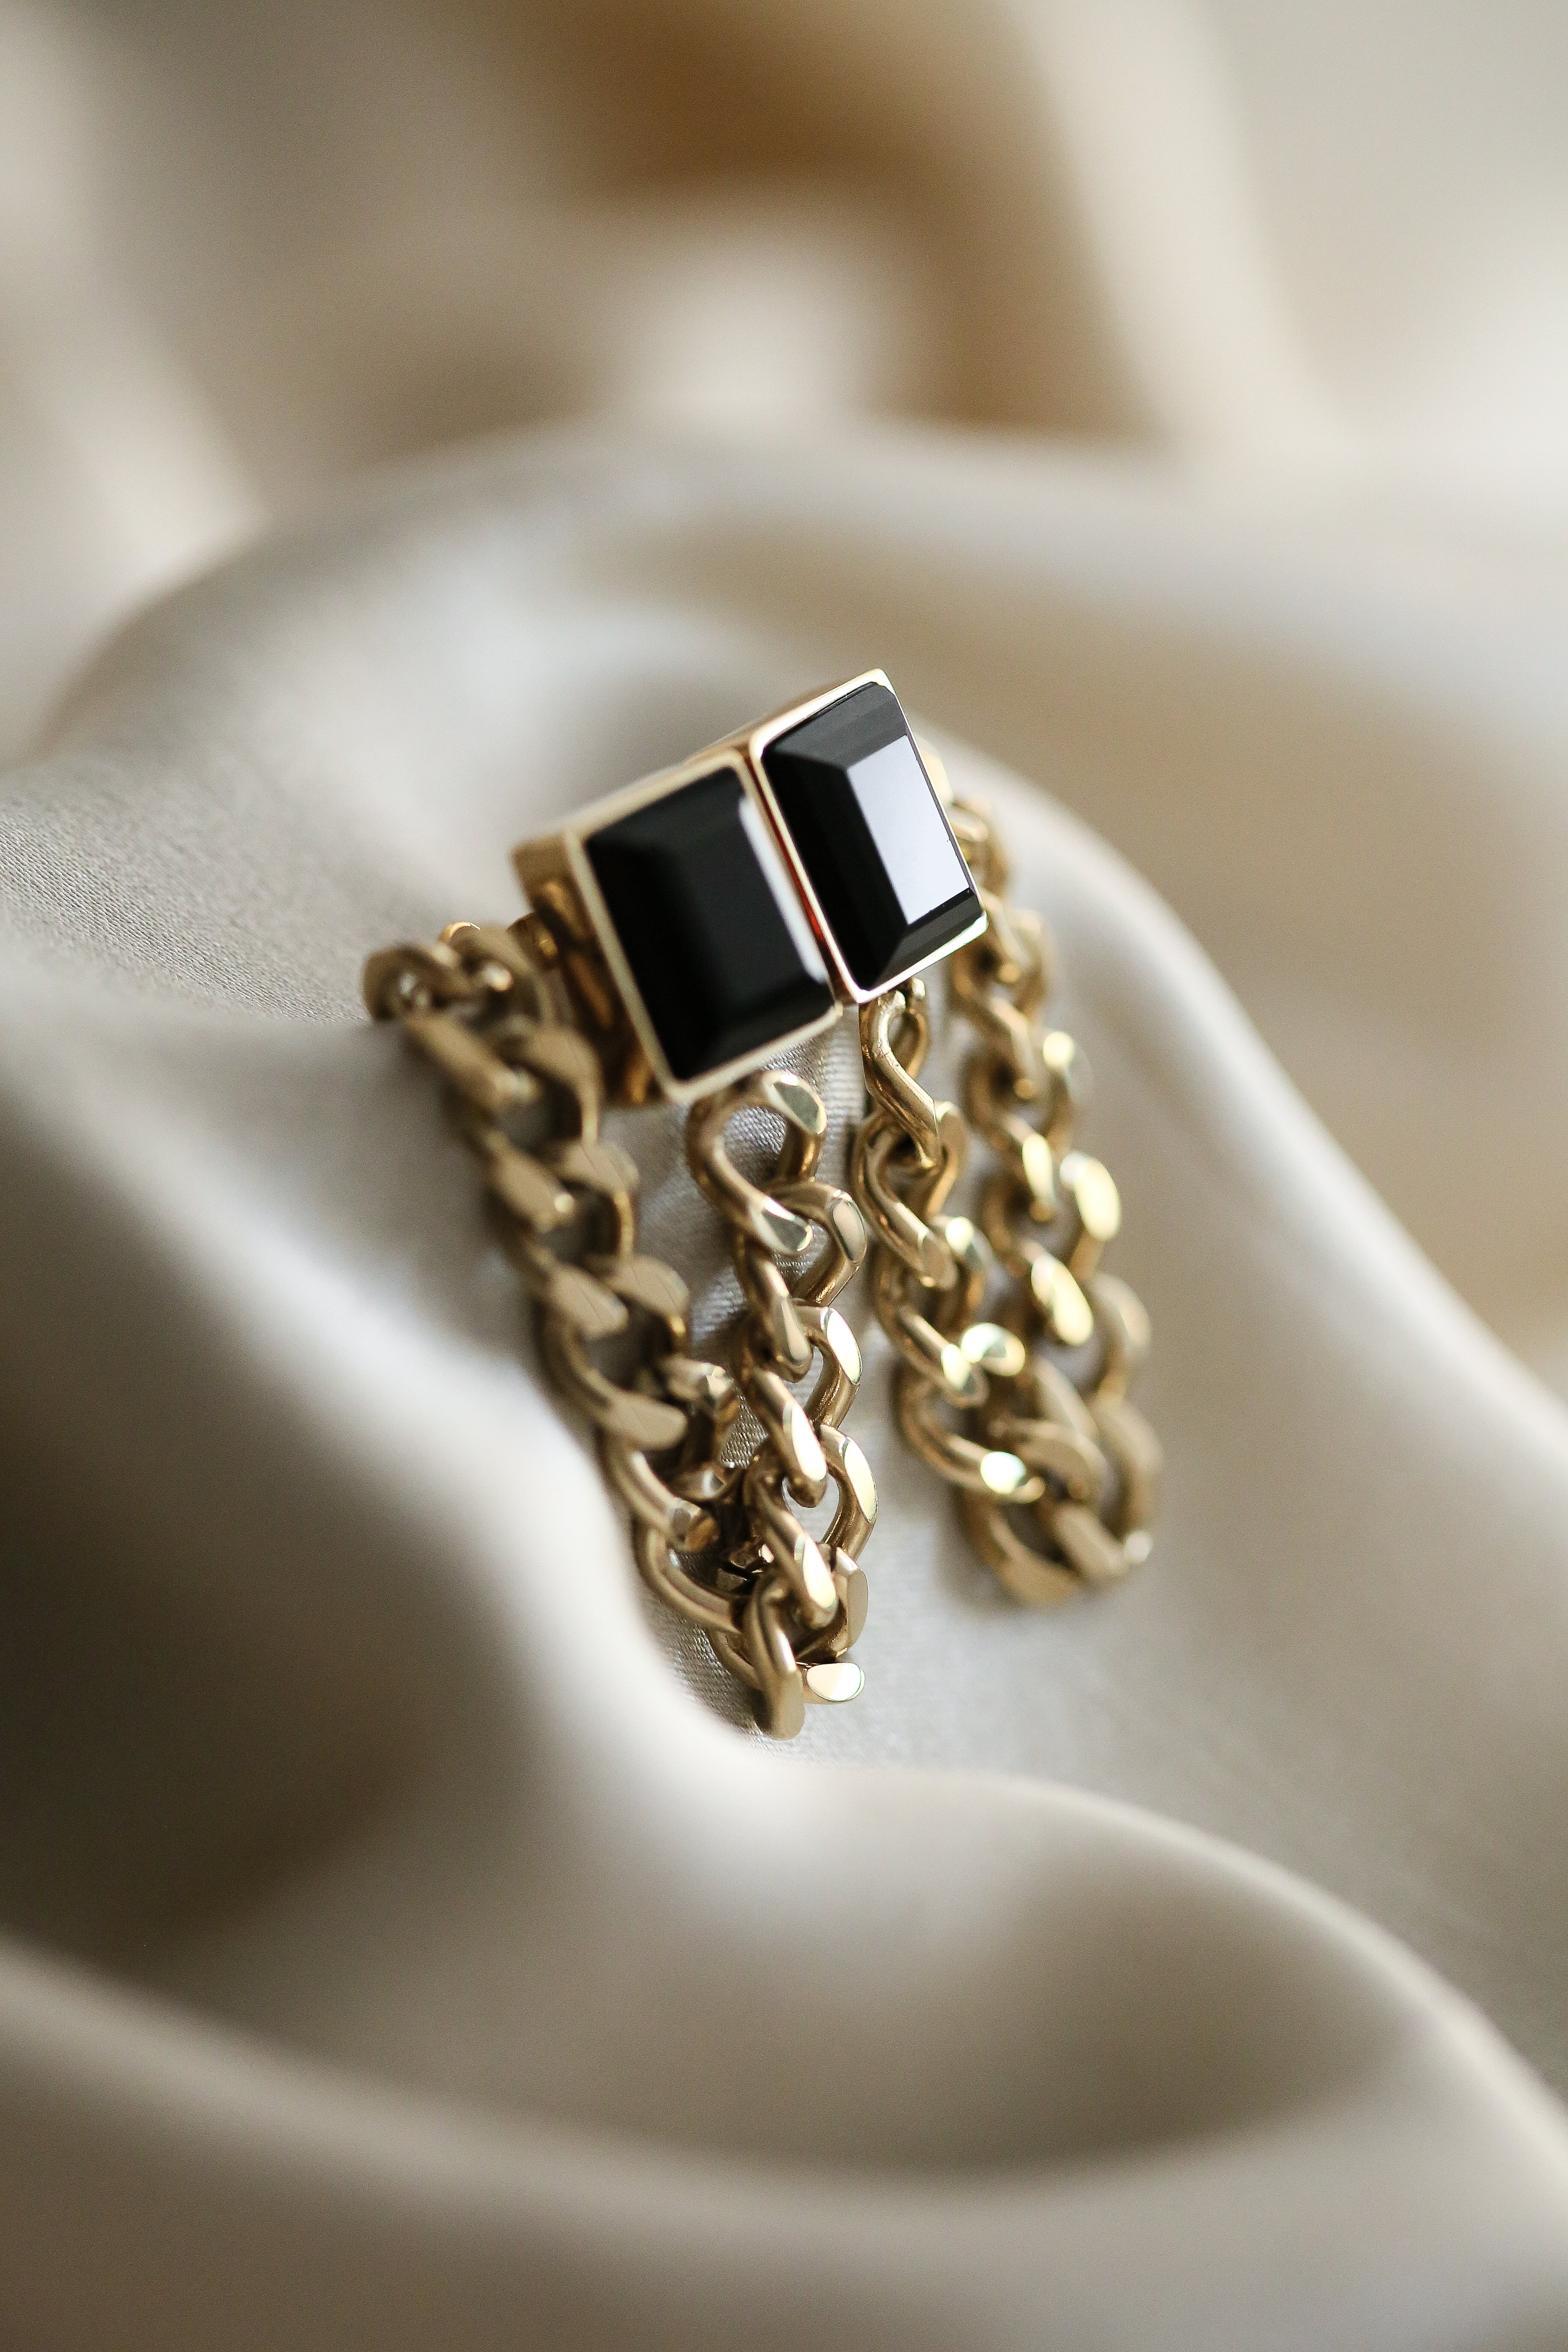 Odette Earrings - Boutique Minimaliste has waterproof, durable, elegant and vintage inspired jewelry